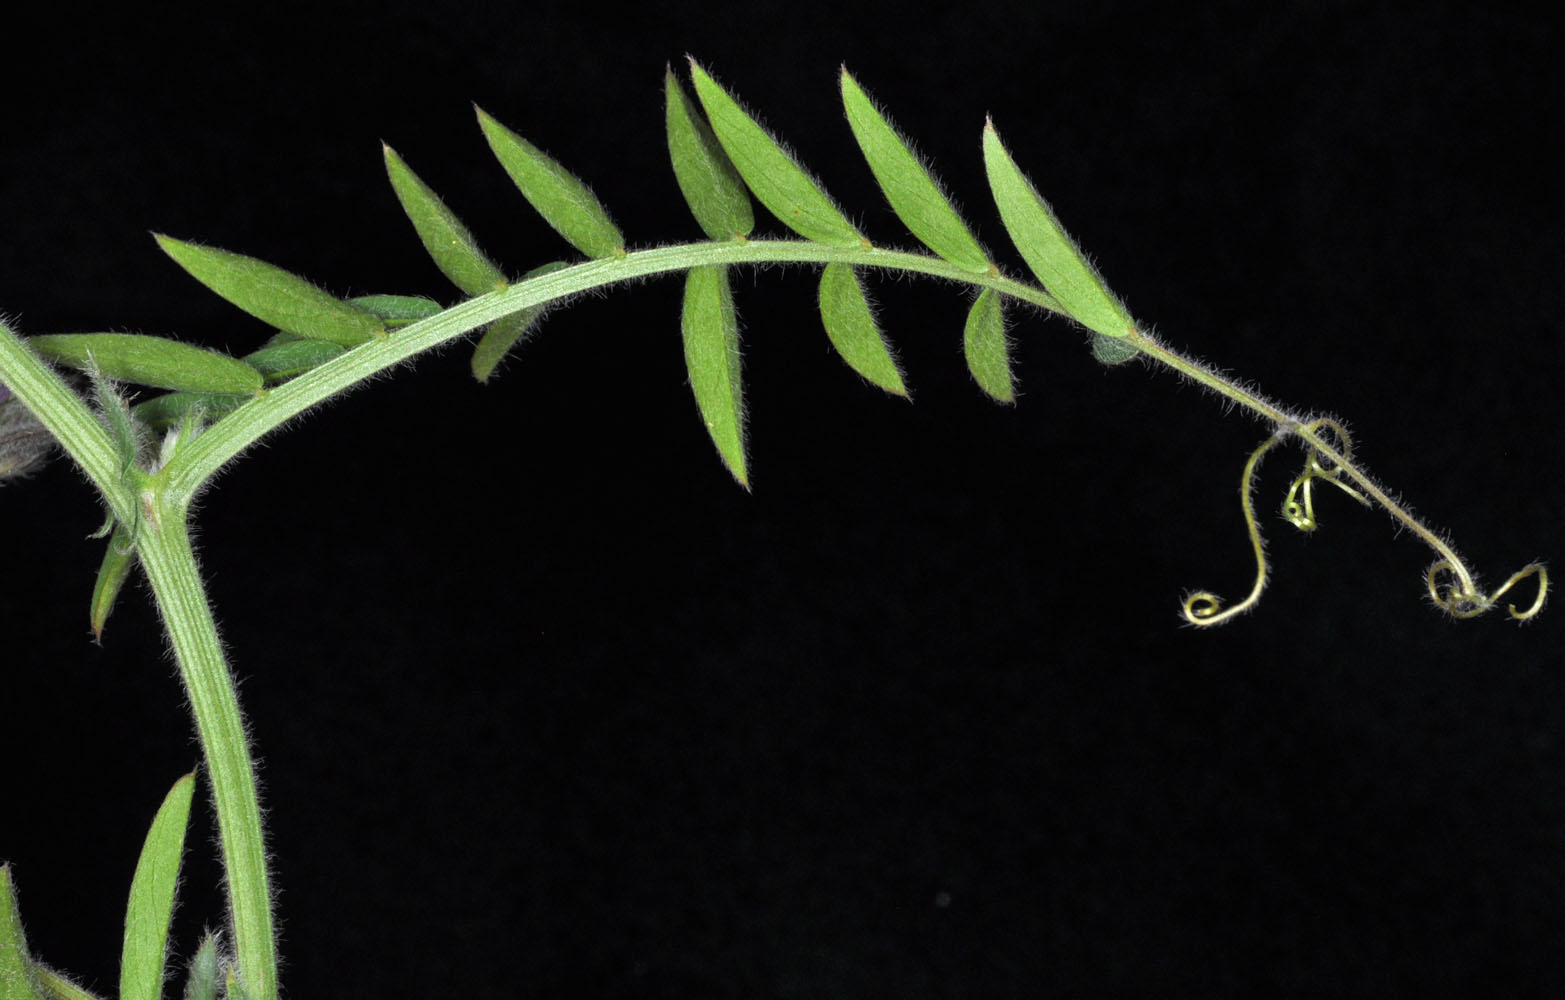 Flora of Eastern Washington Image: Vicia villosa